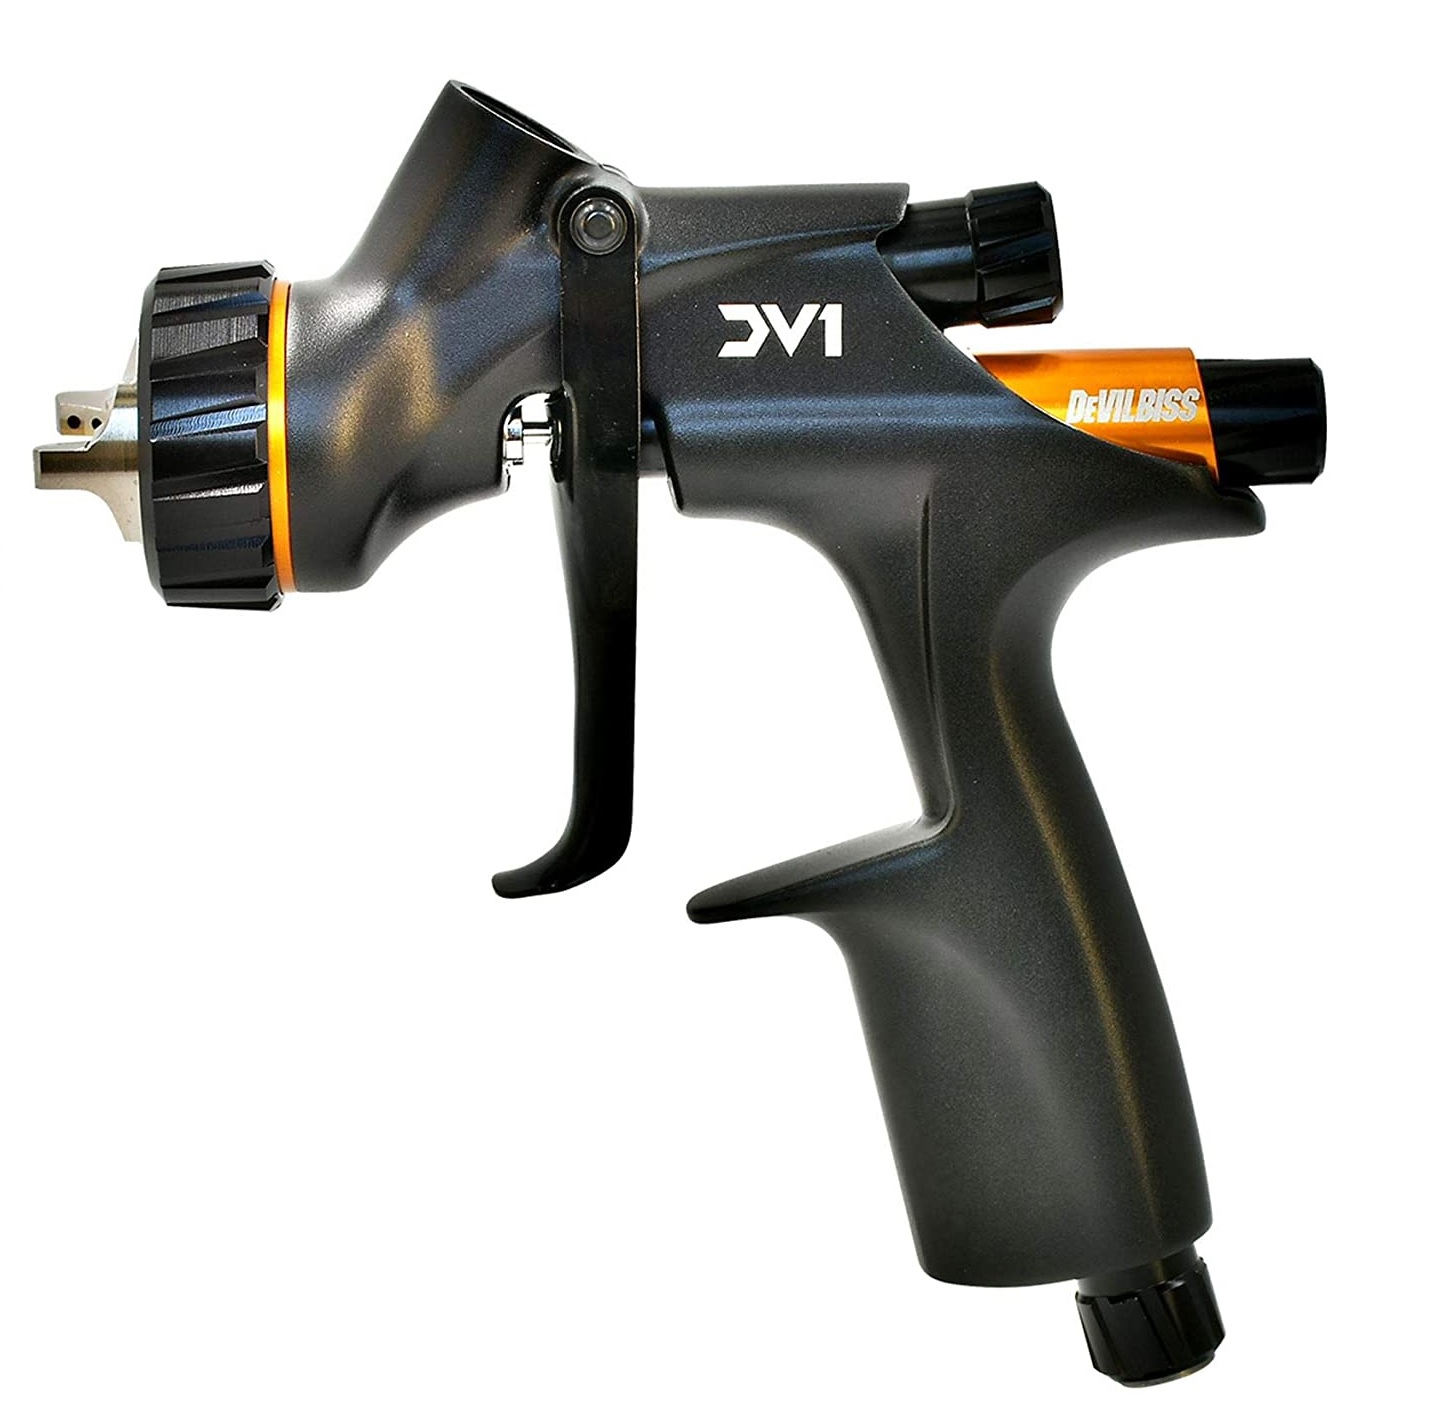 Pistola de Pintura Profissional DeVilbiss DV1-C Clearcoat própria para Verniz sem manômetro digital - Pintura